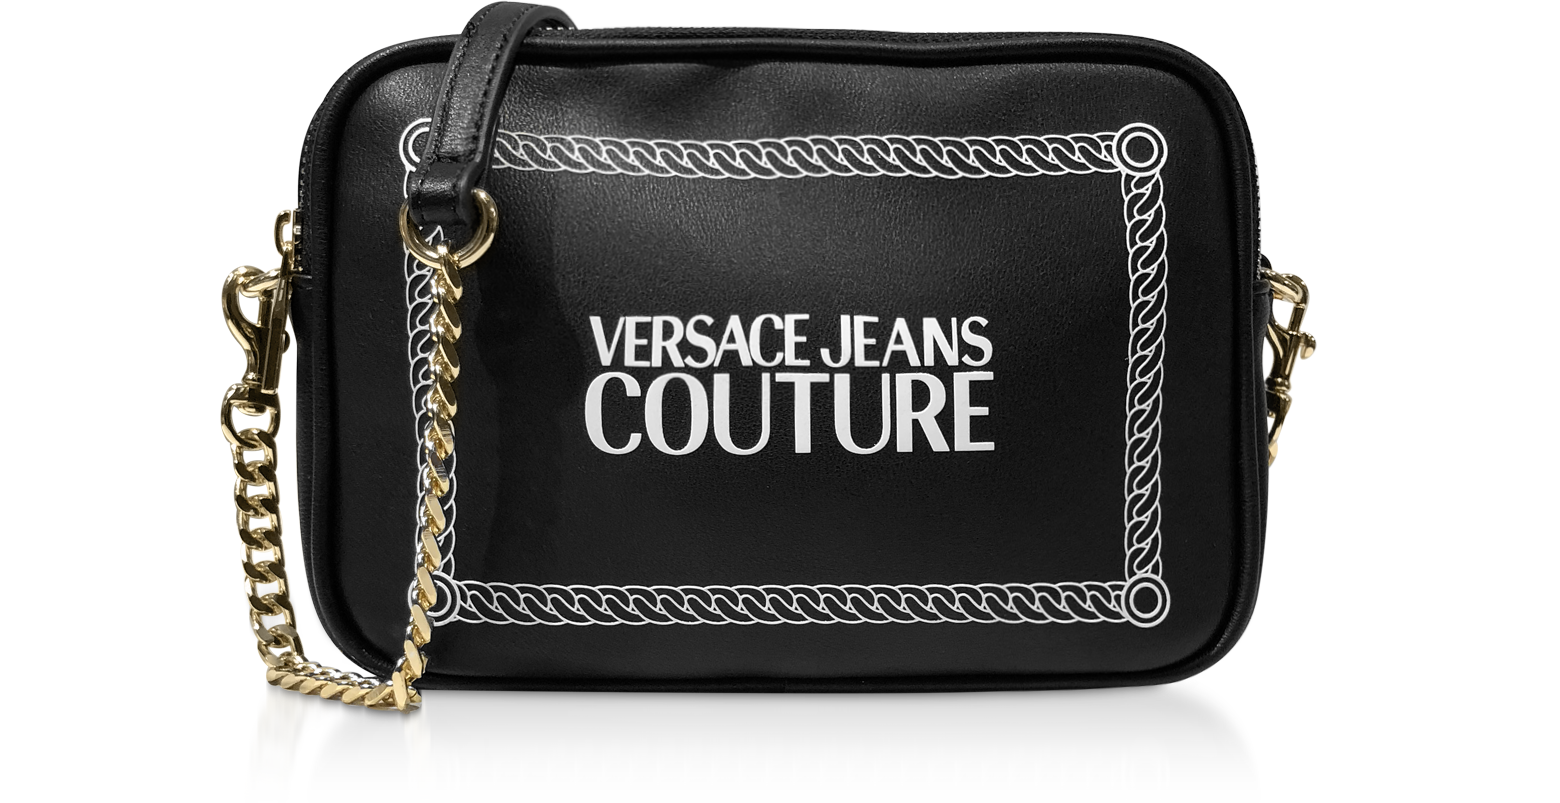 versace jeans black bag